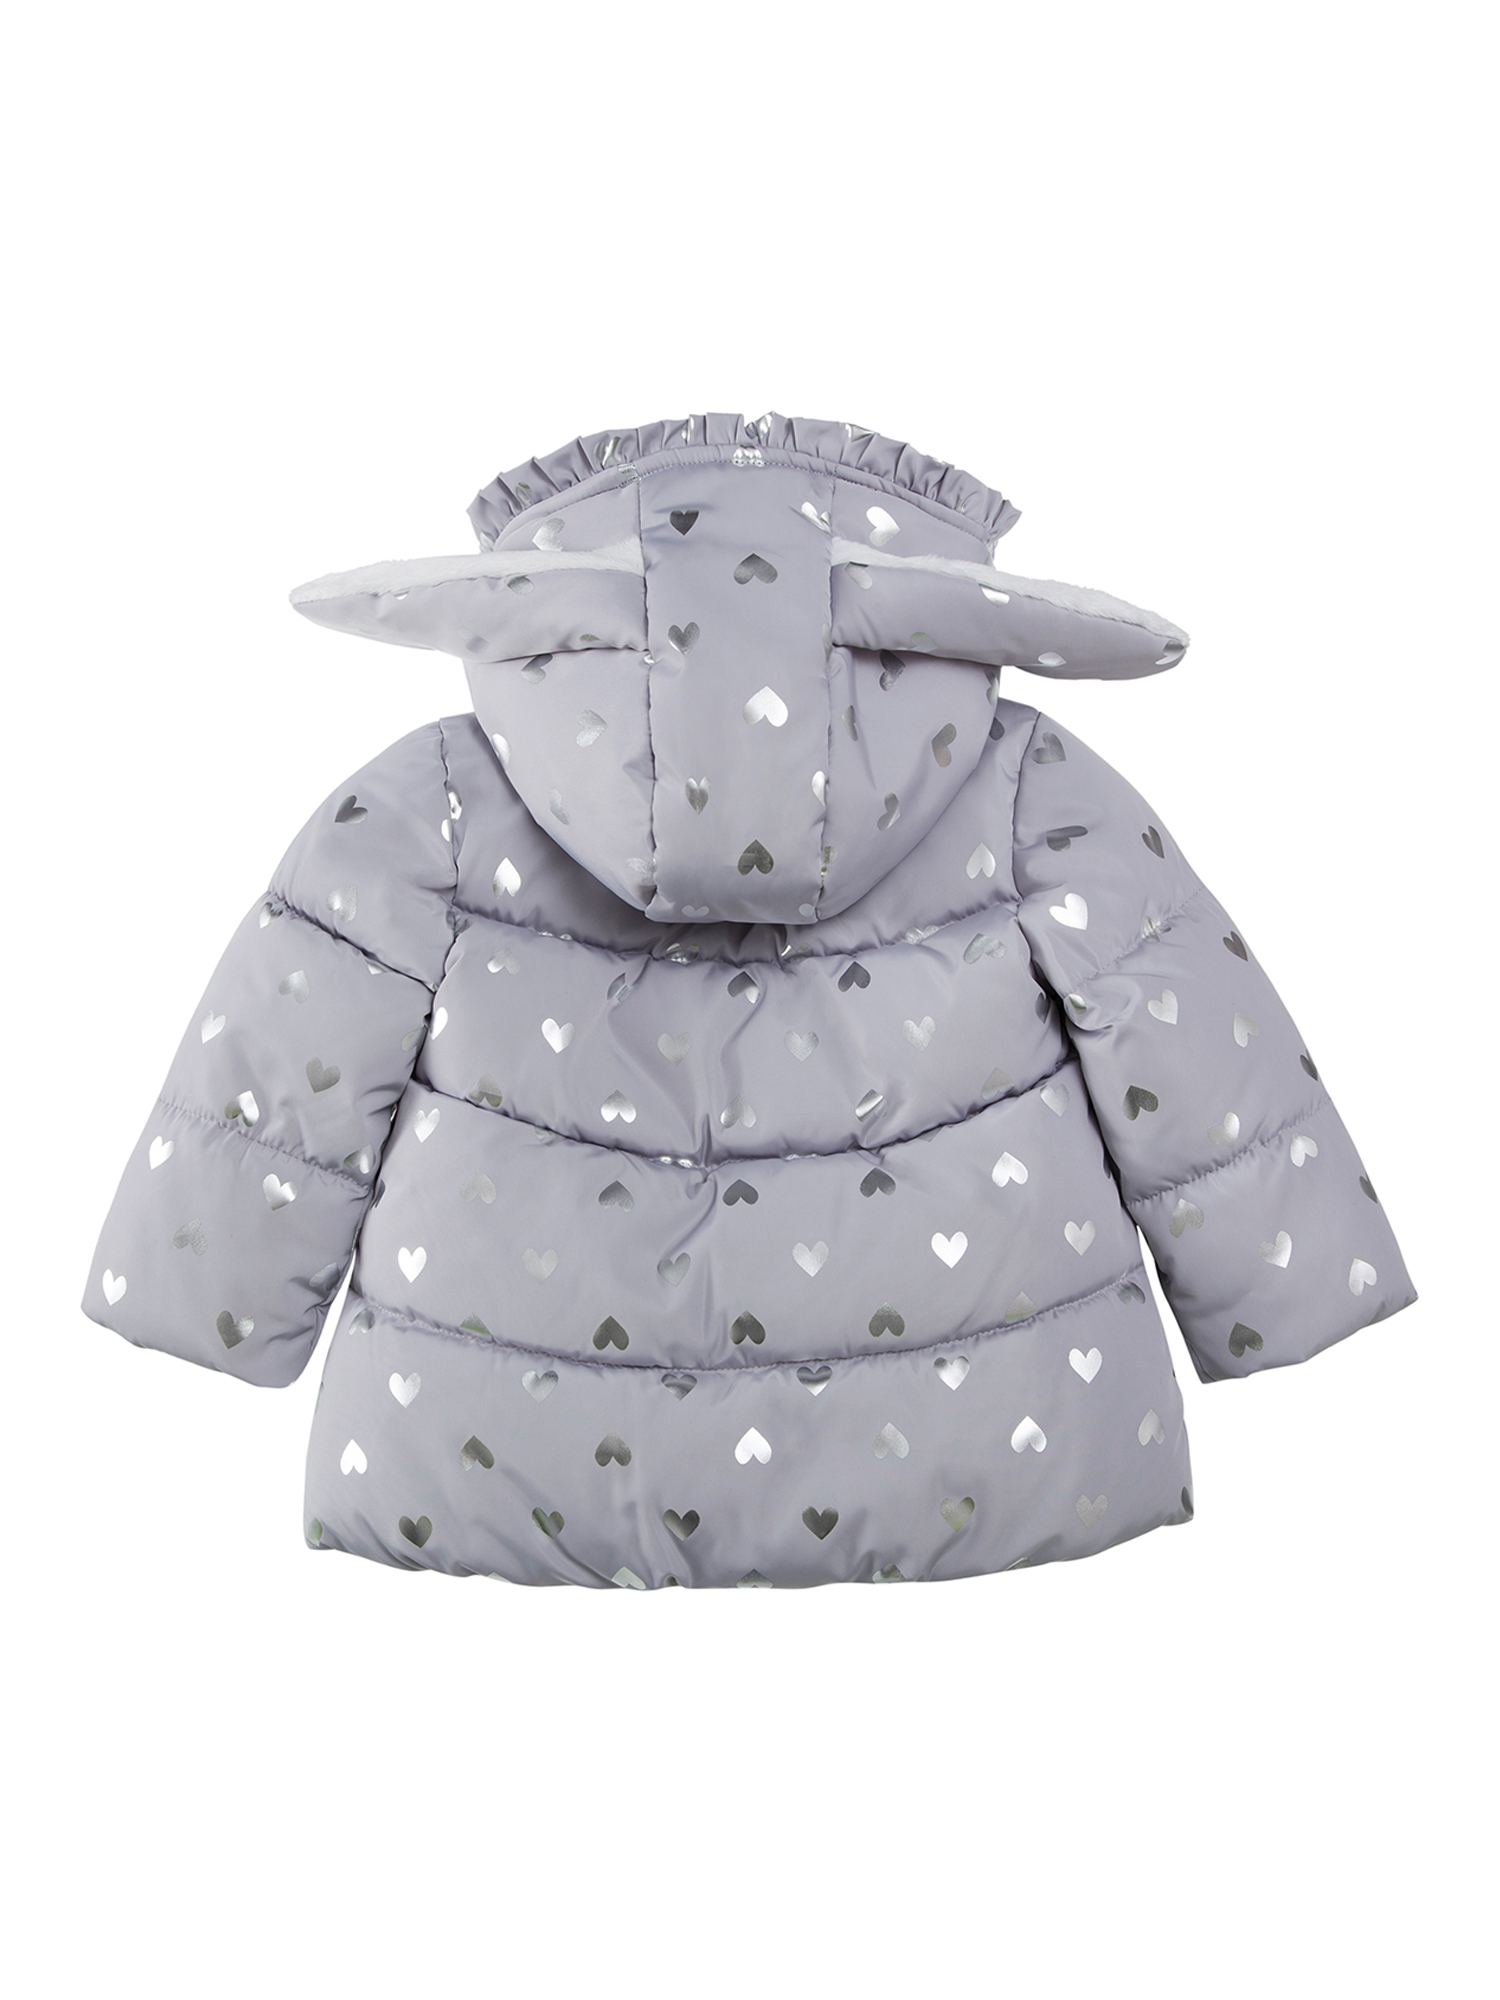 Rokka&Rolla Baby Girls' Infant Fleece Puffer Jacket -Toddler Warm Winter Coat, Sizes 6-24M - image 3 of 6